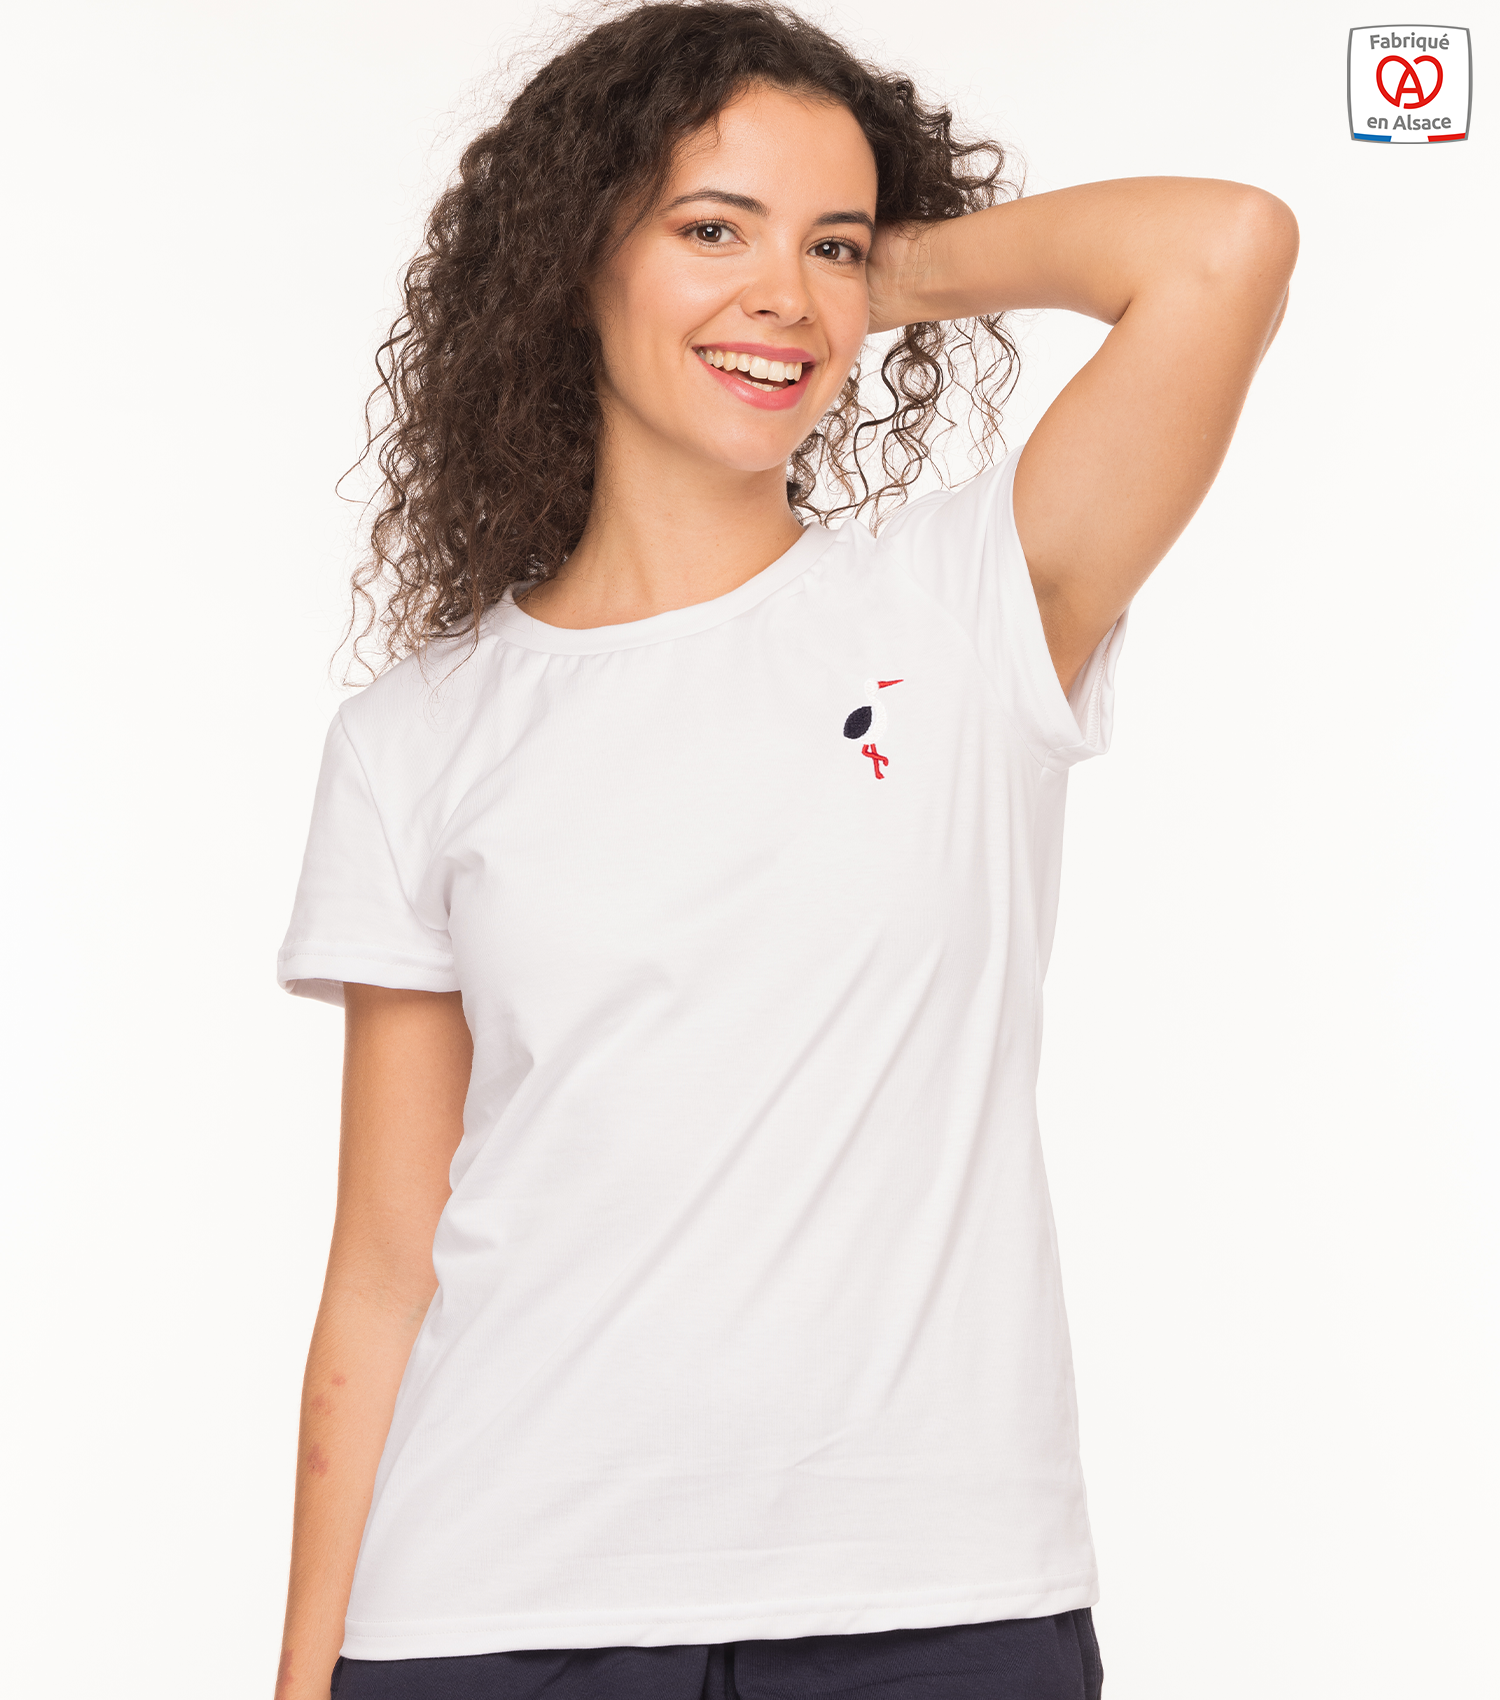 theim-t-shirt-femme-blanc-cigogne-made-in-alsace-1500x1700px